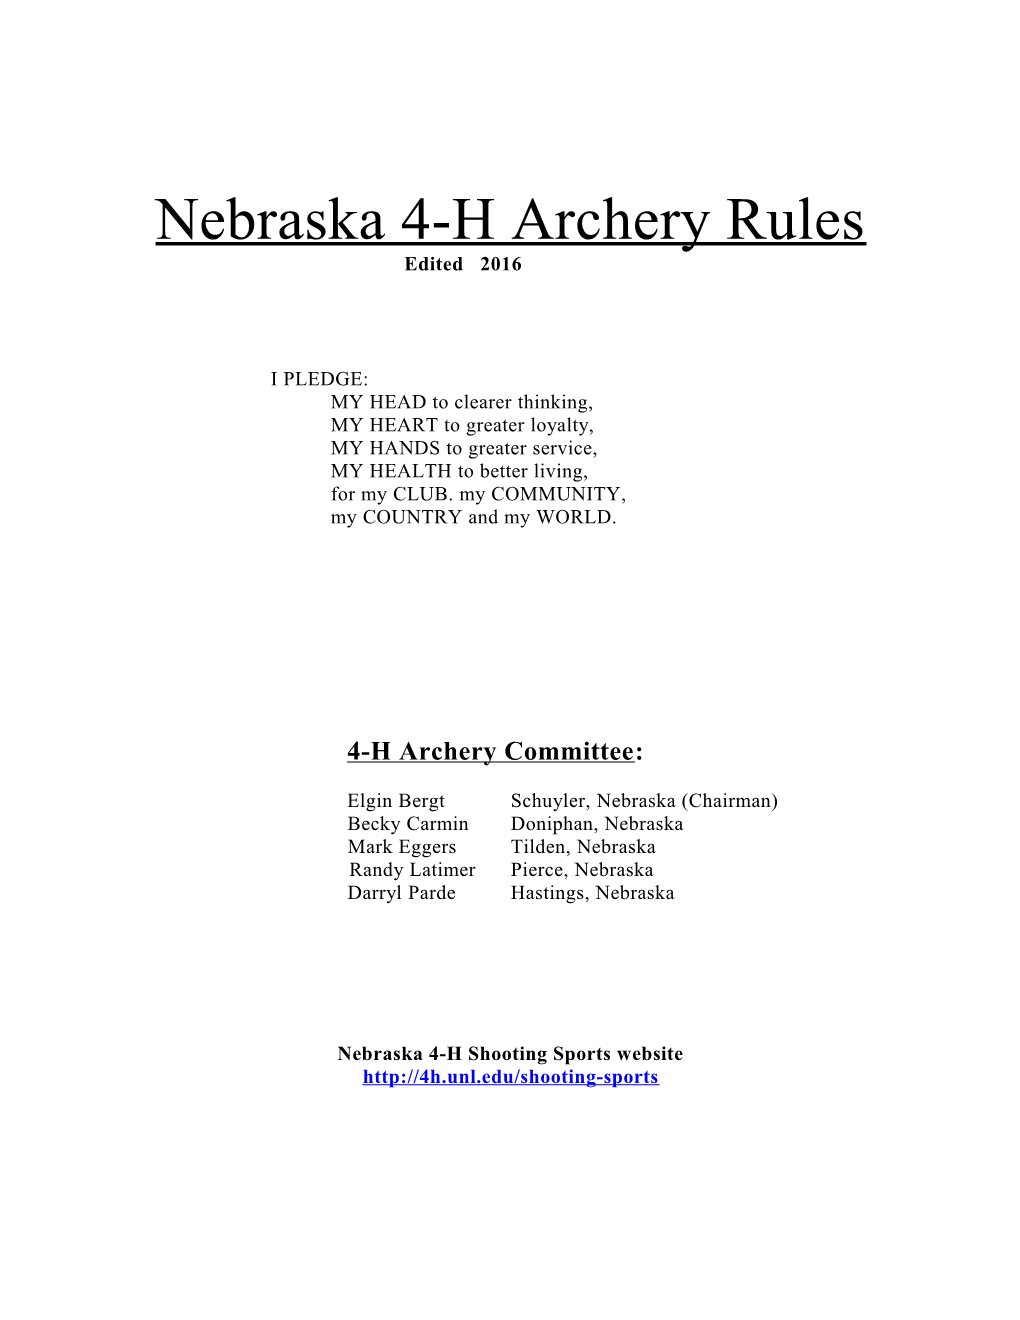 4-H Archery Rules-Version 2